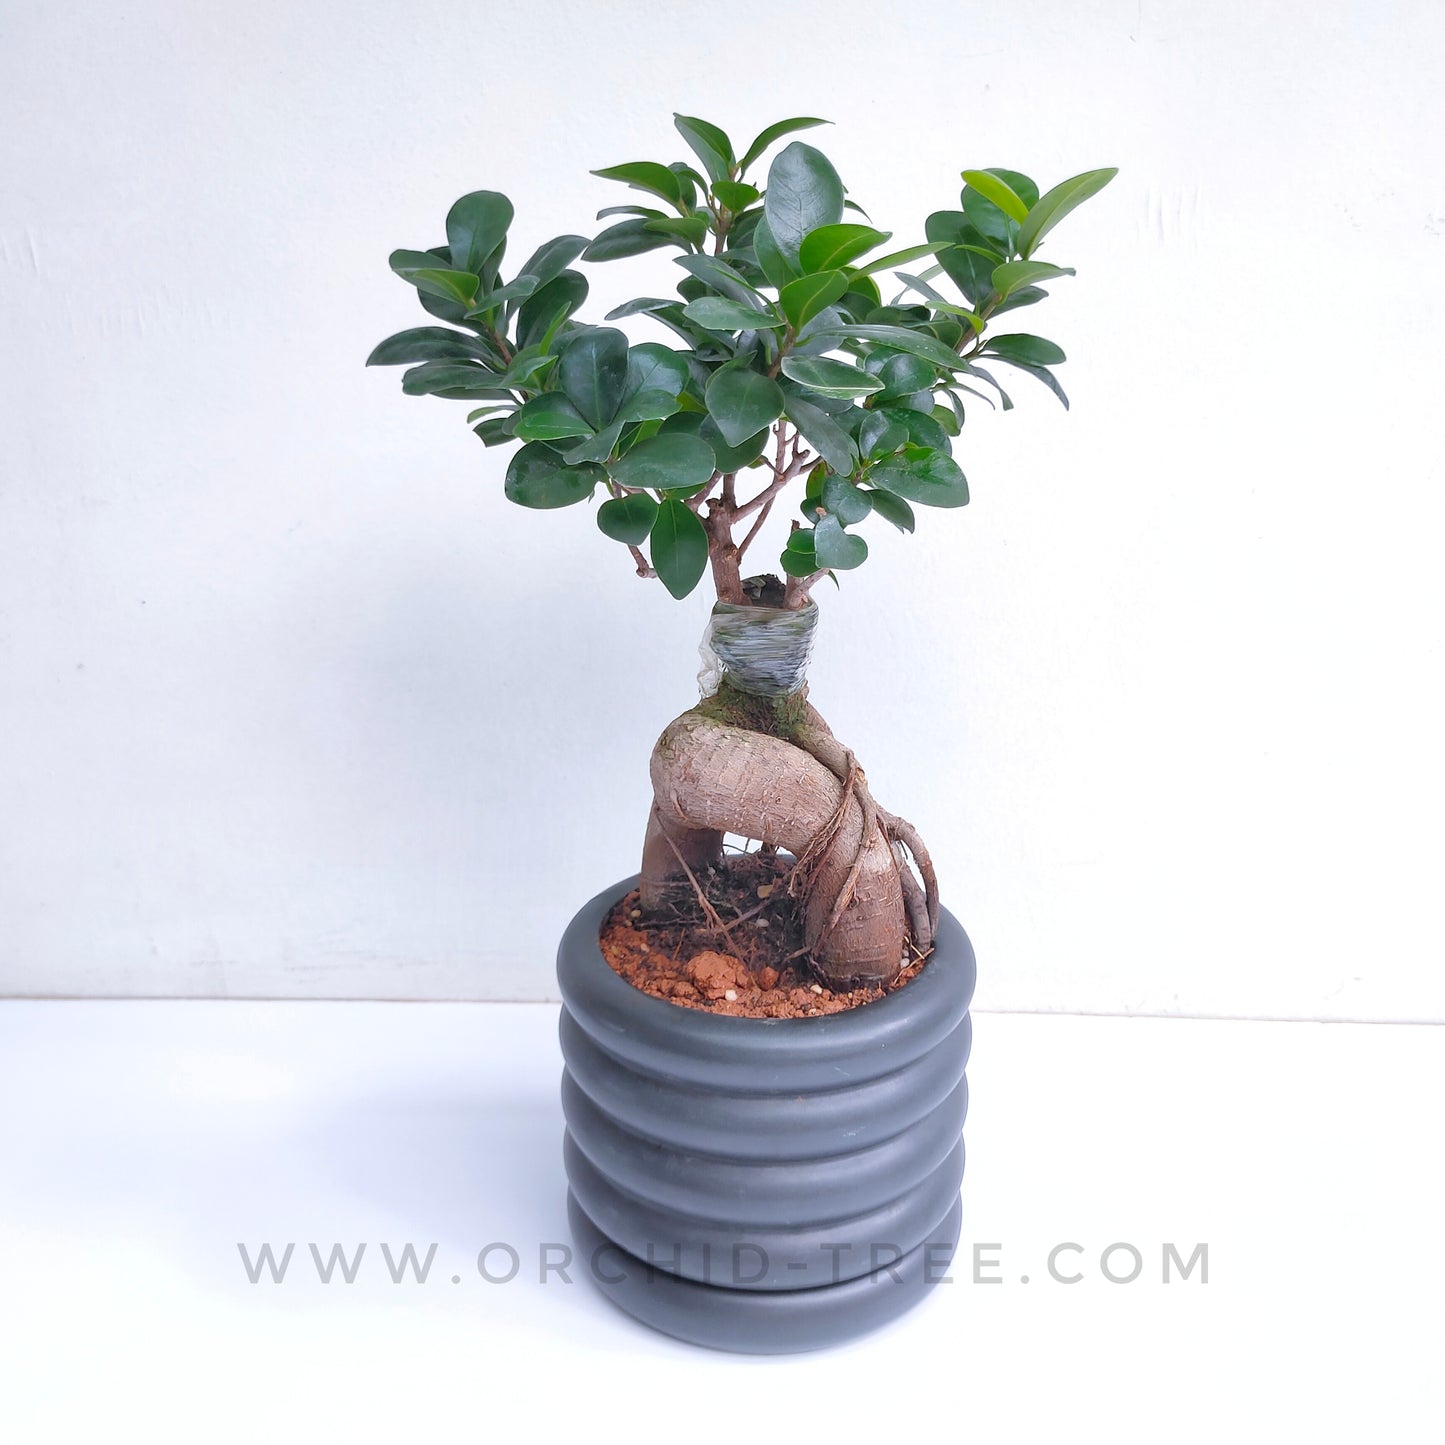 Ficus Bonsai Plant in Ceramic Pot